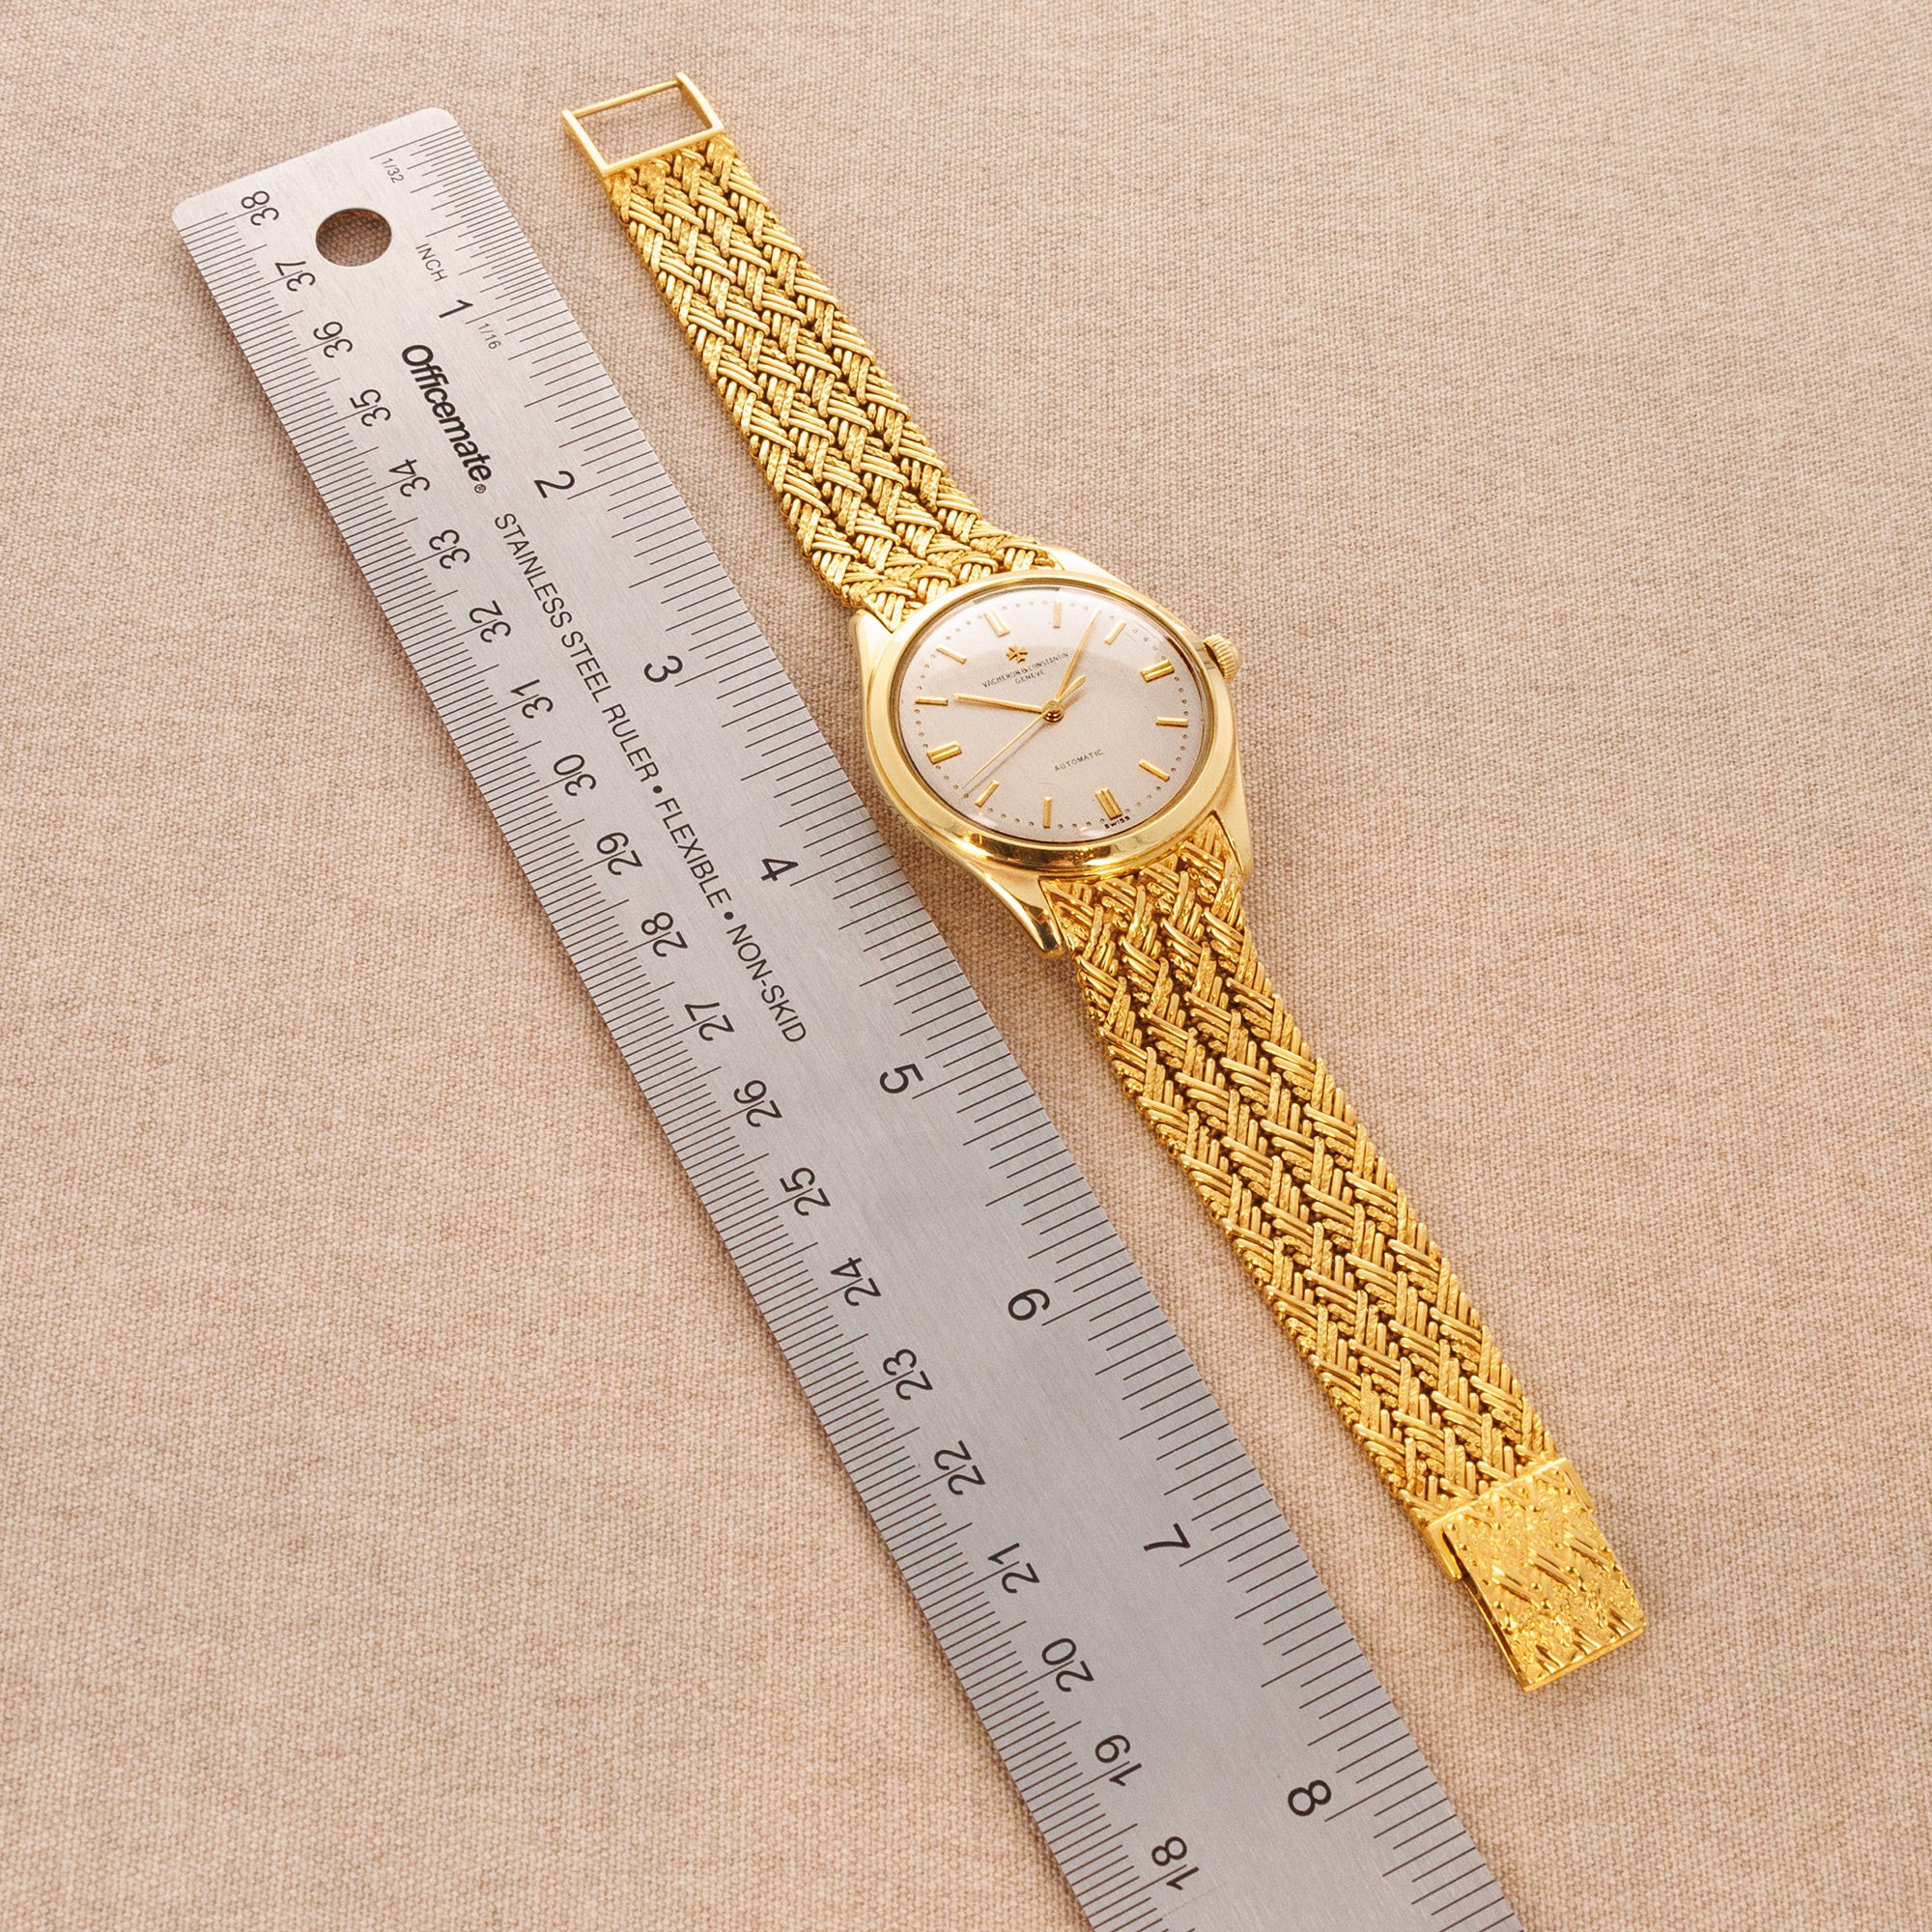 Vacheron Constantin - Vacheron Constantin Yellow Gold Bracelet Watch Ref. 4870 - The Keystone Watches